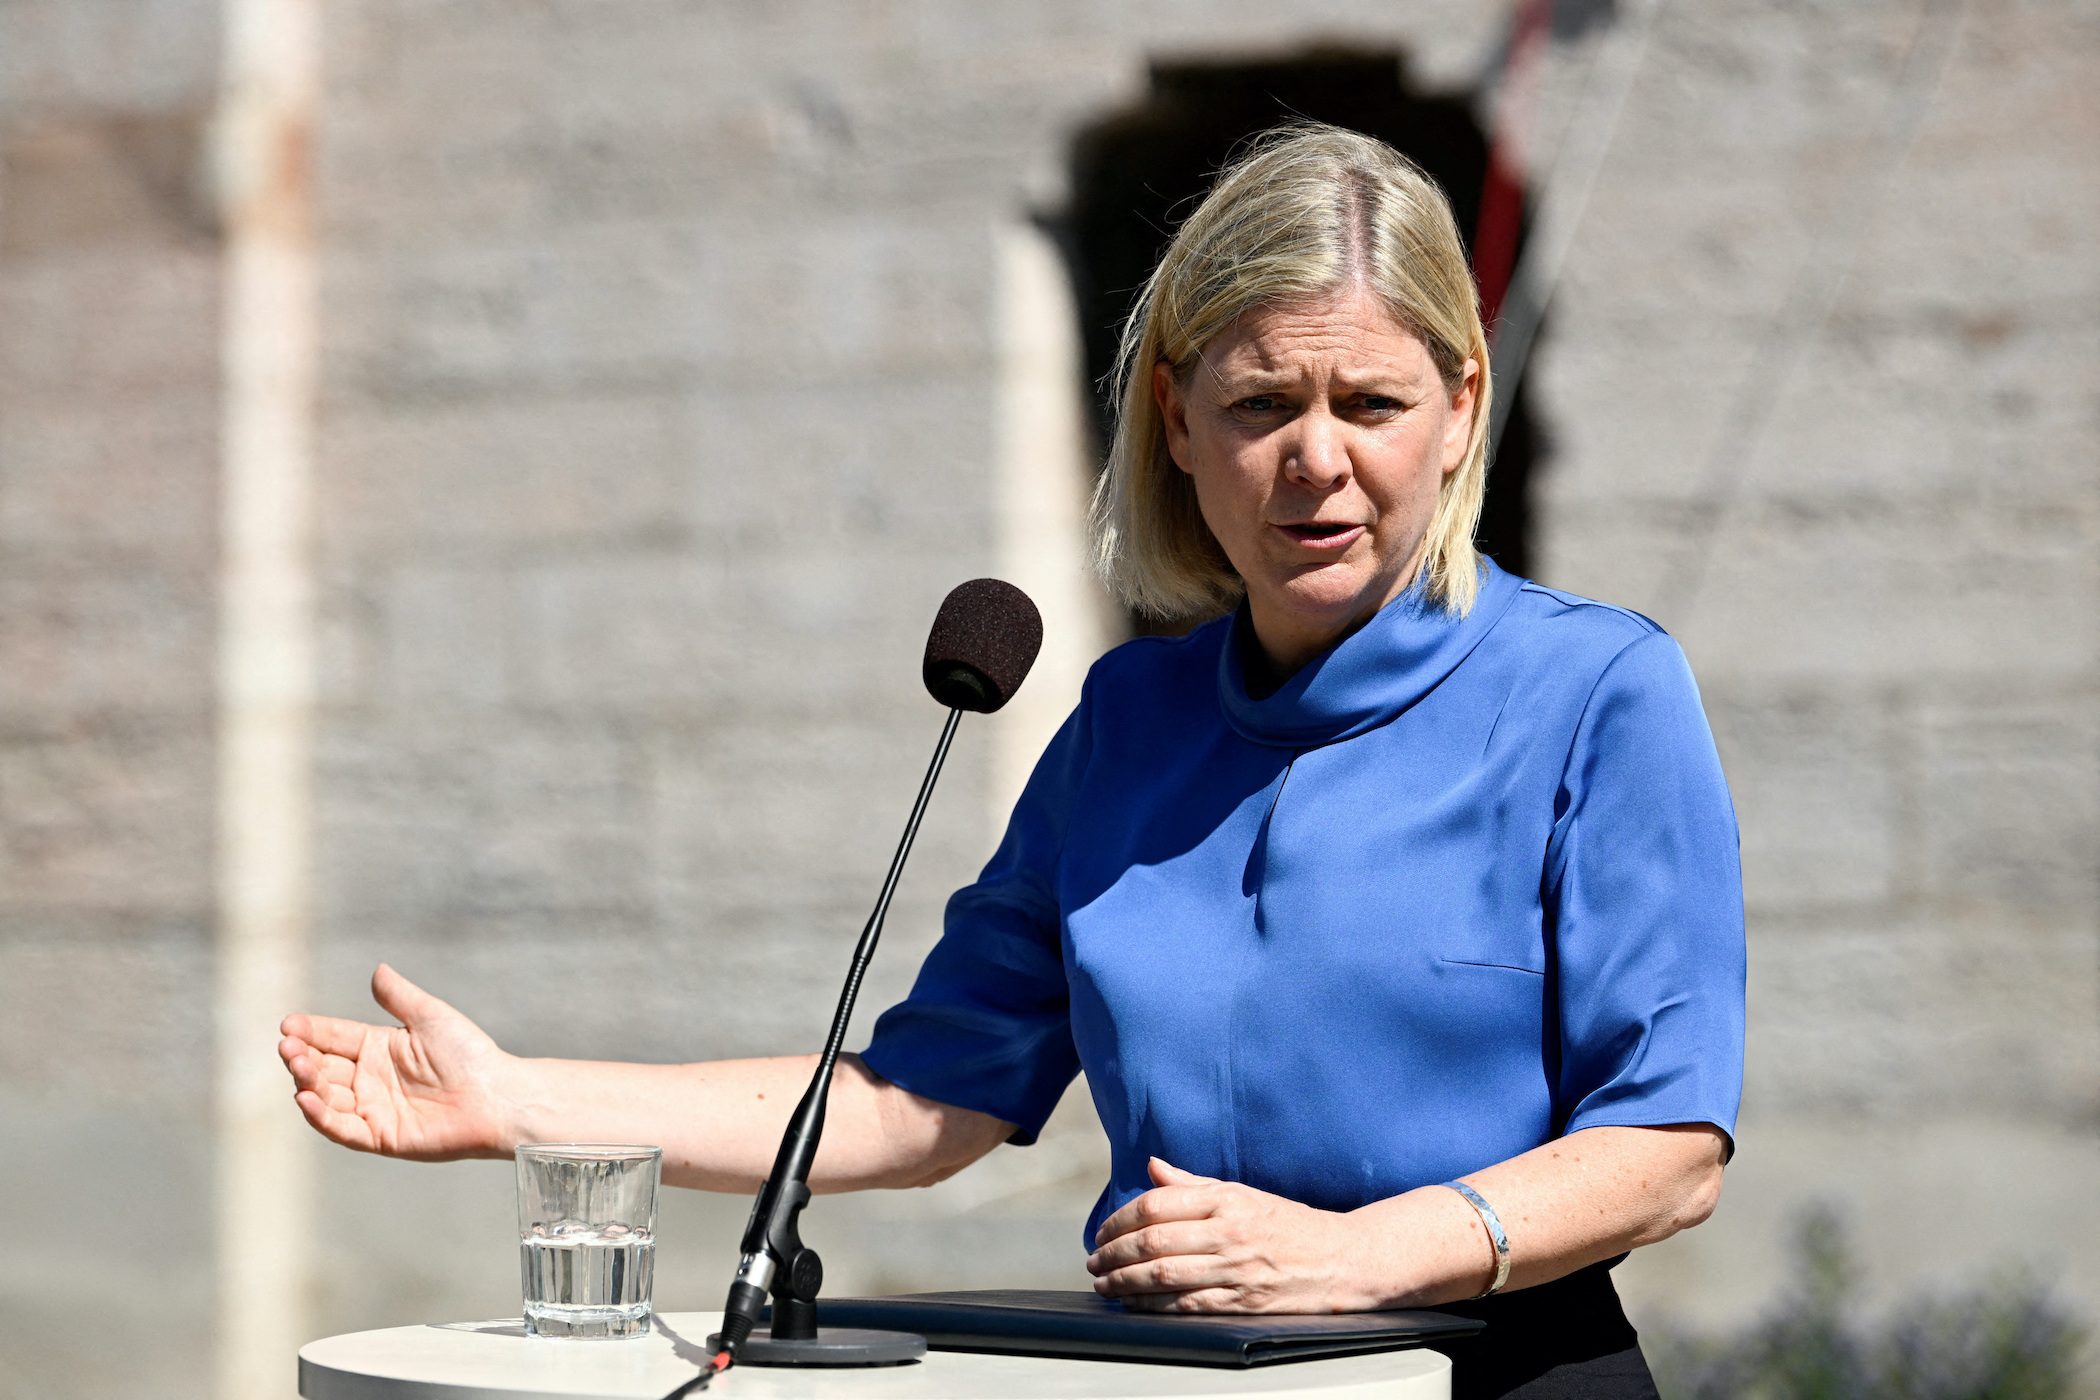 Swedish PM pledges billions to offset soaring energy bills as election nears